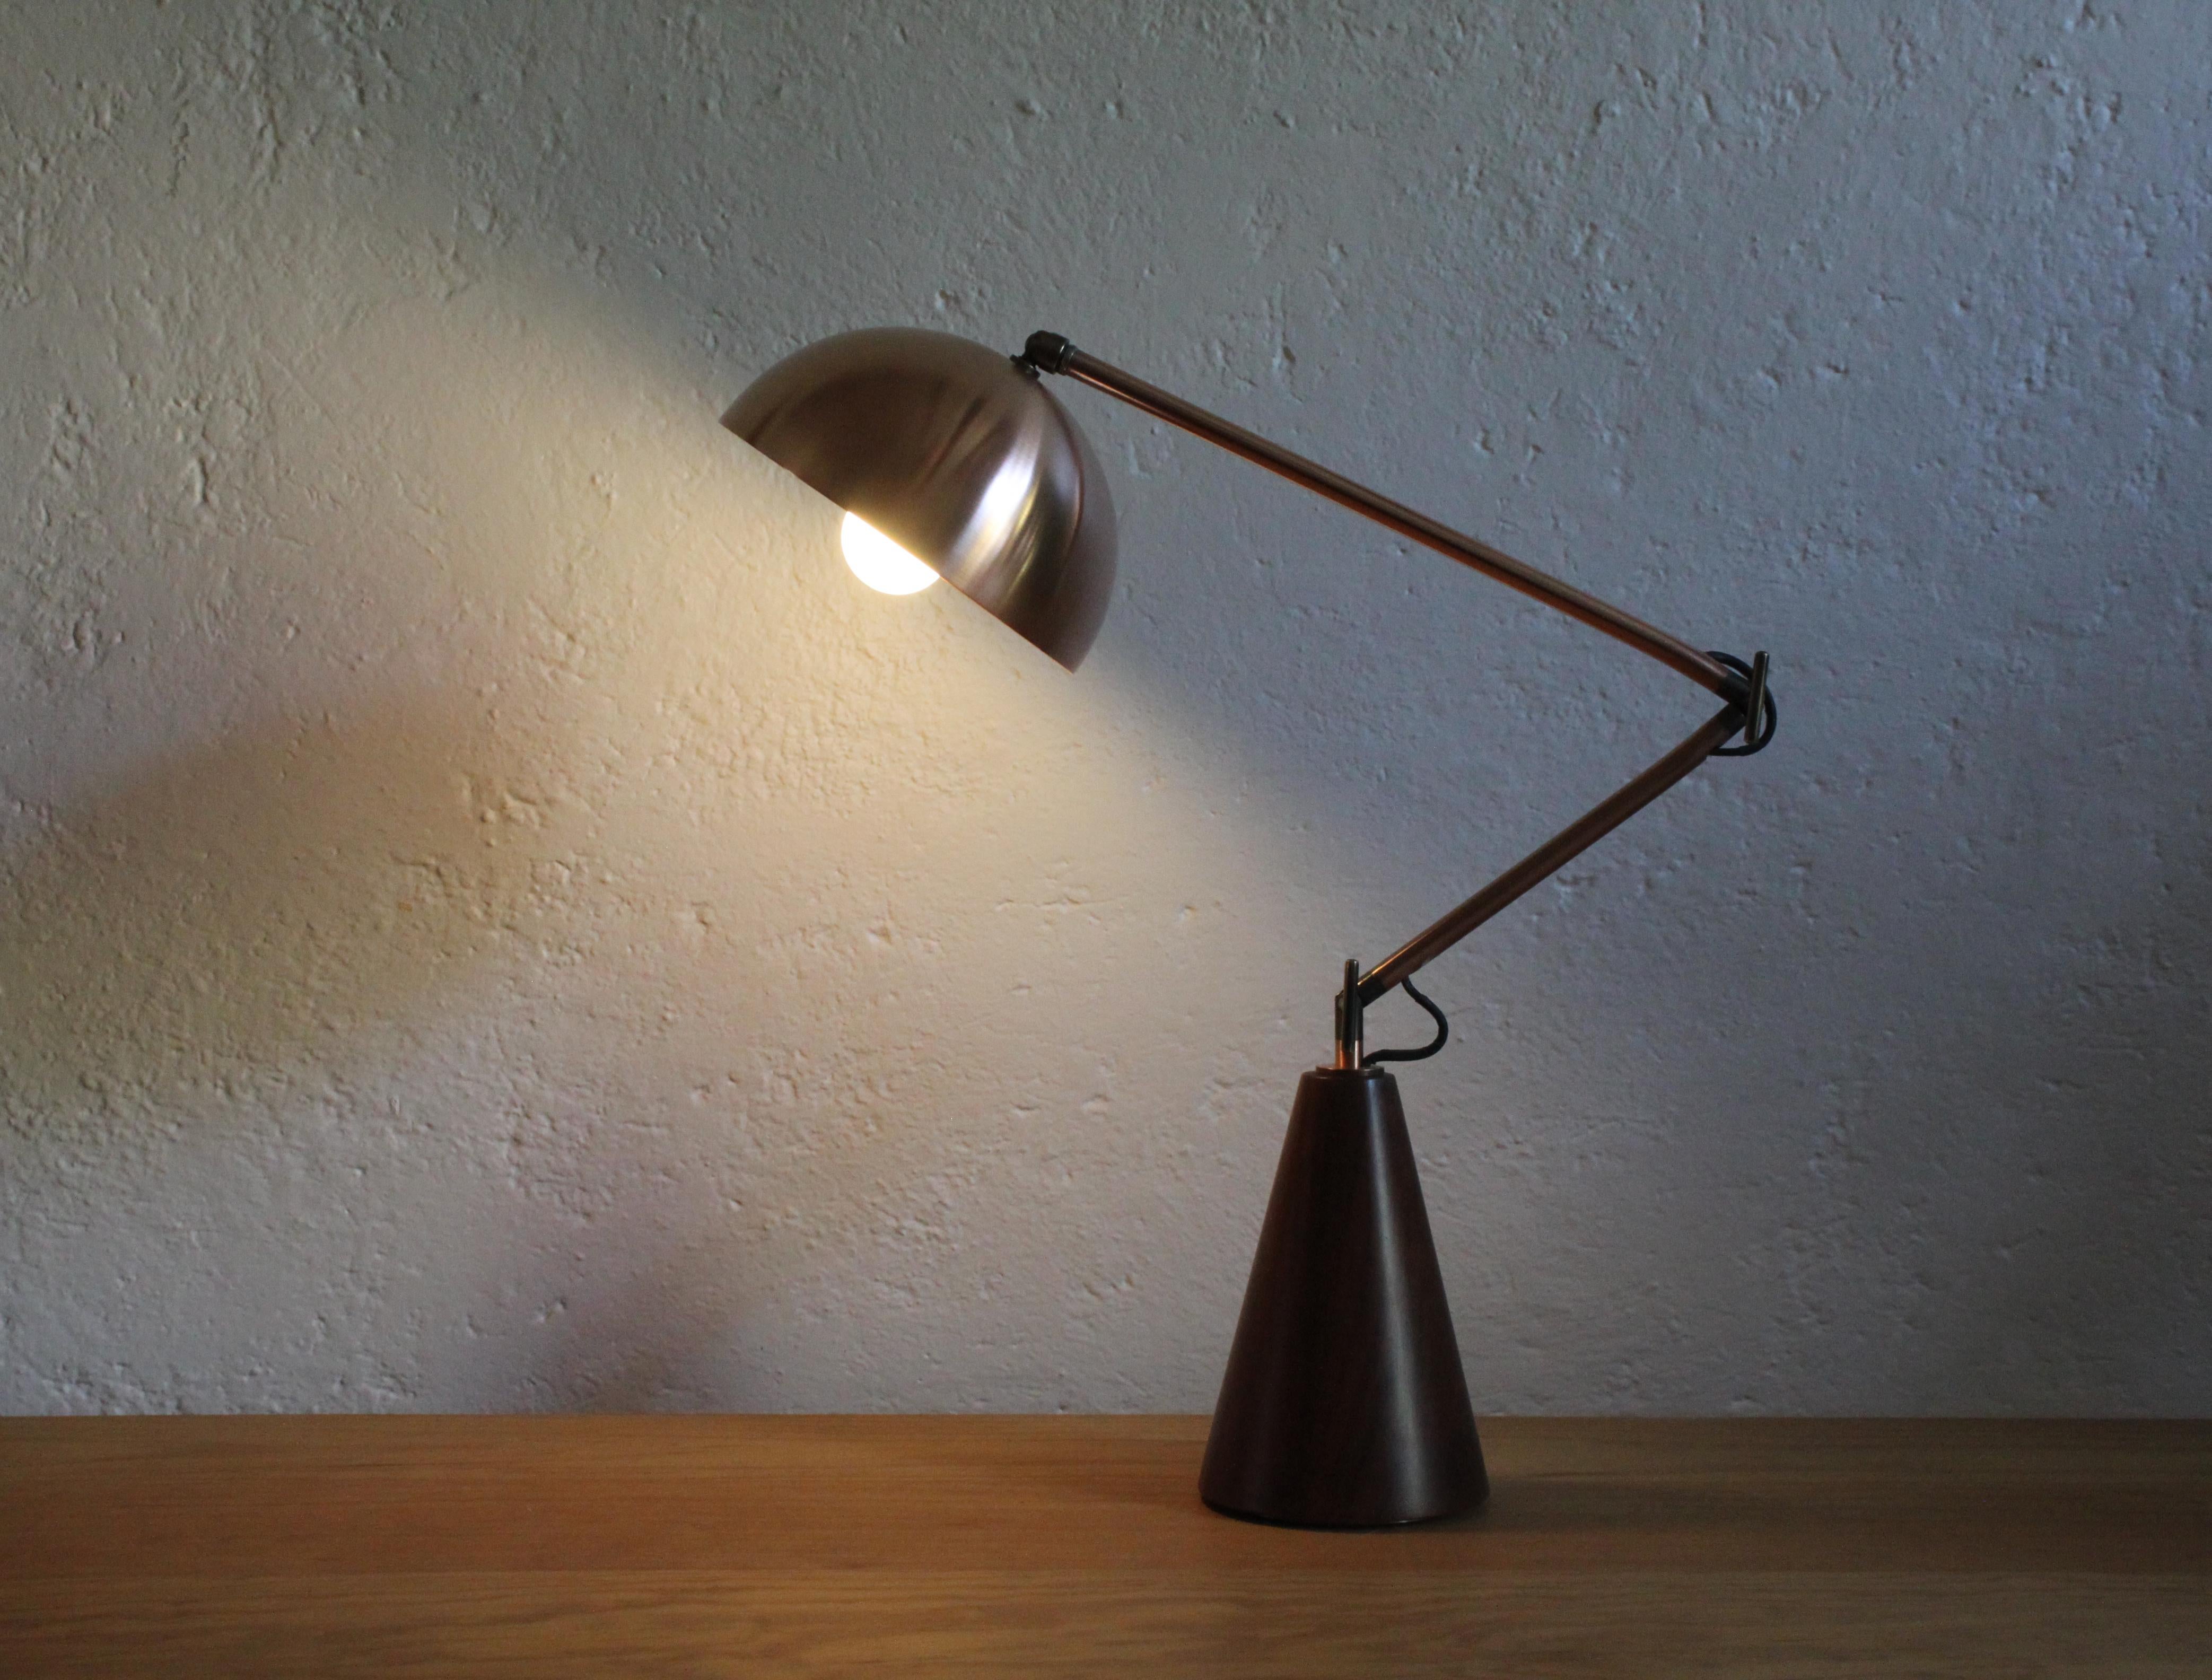 Copper Codos De Mesa Table Lamp by Maria Beckmann, Represented by Tuleste Factory